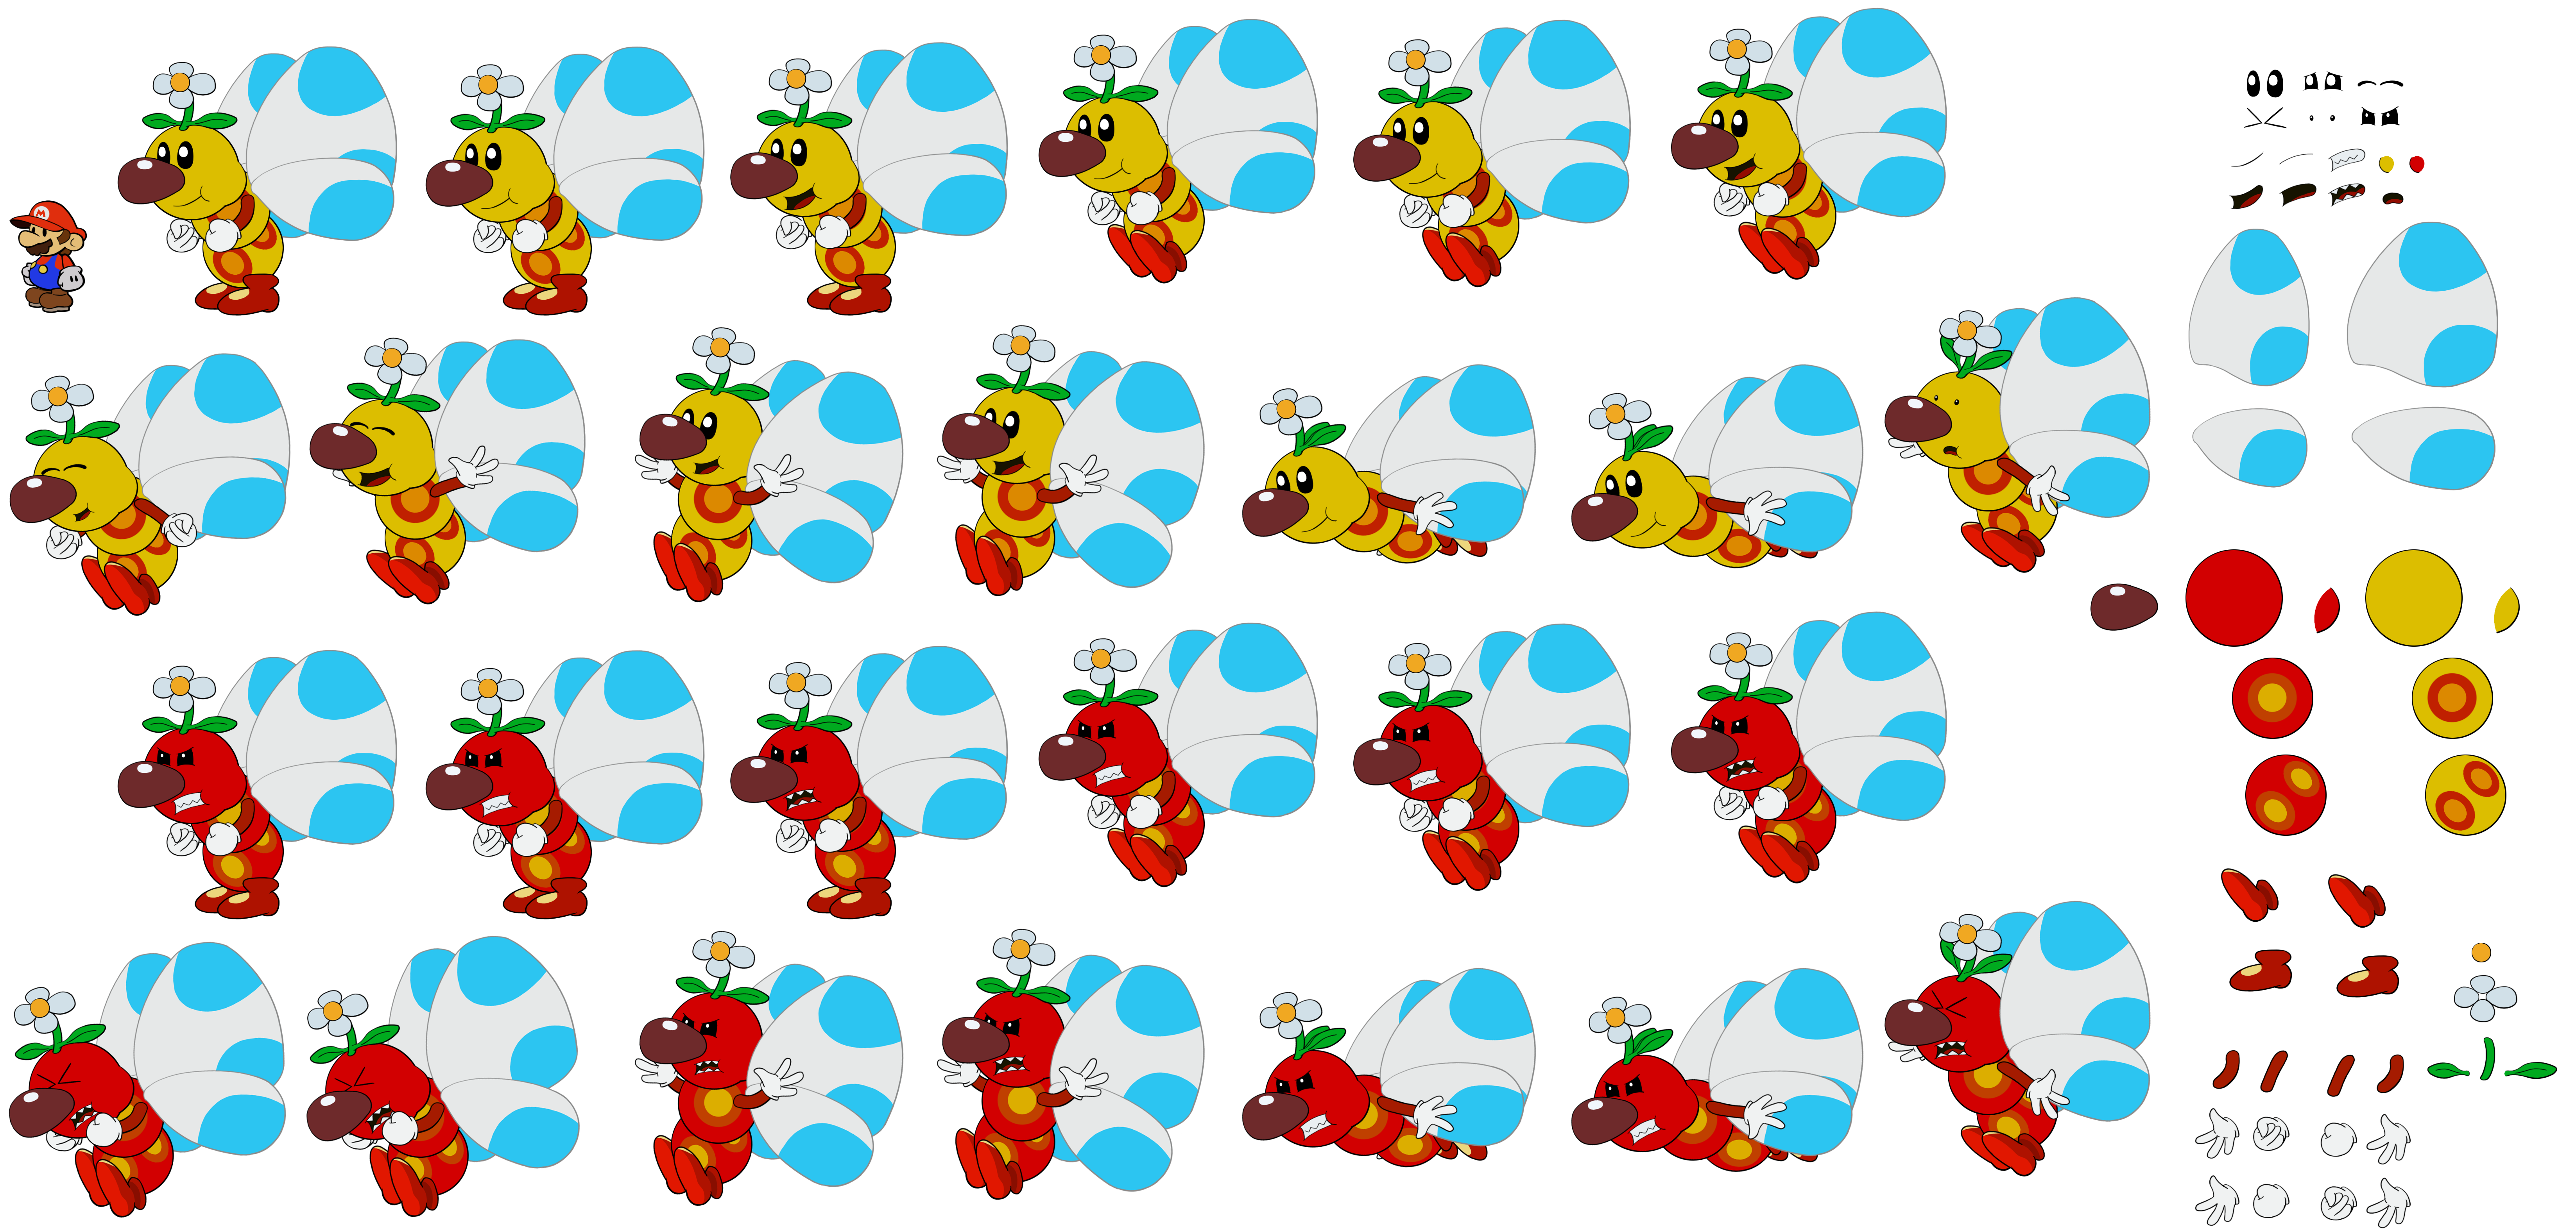 Yoshi Customs - Flutter (Paper Mario-Style)